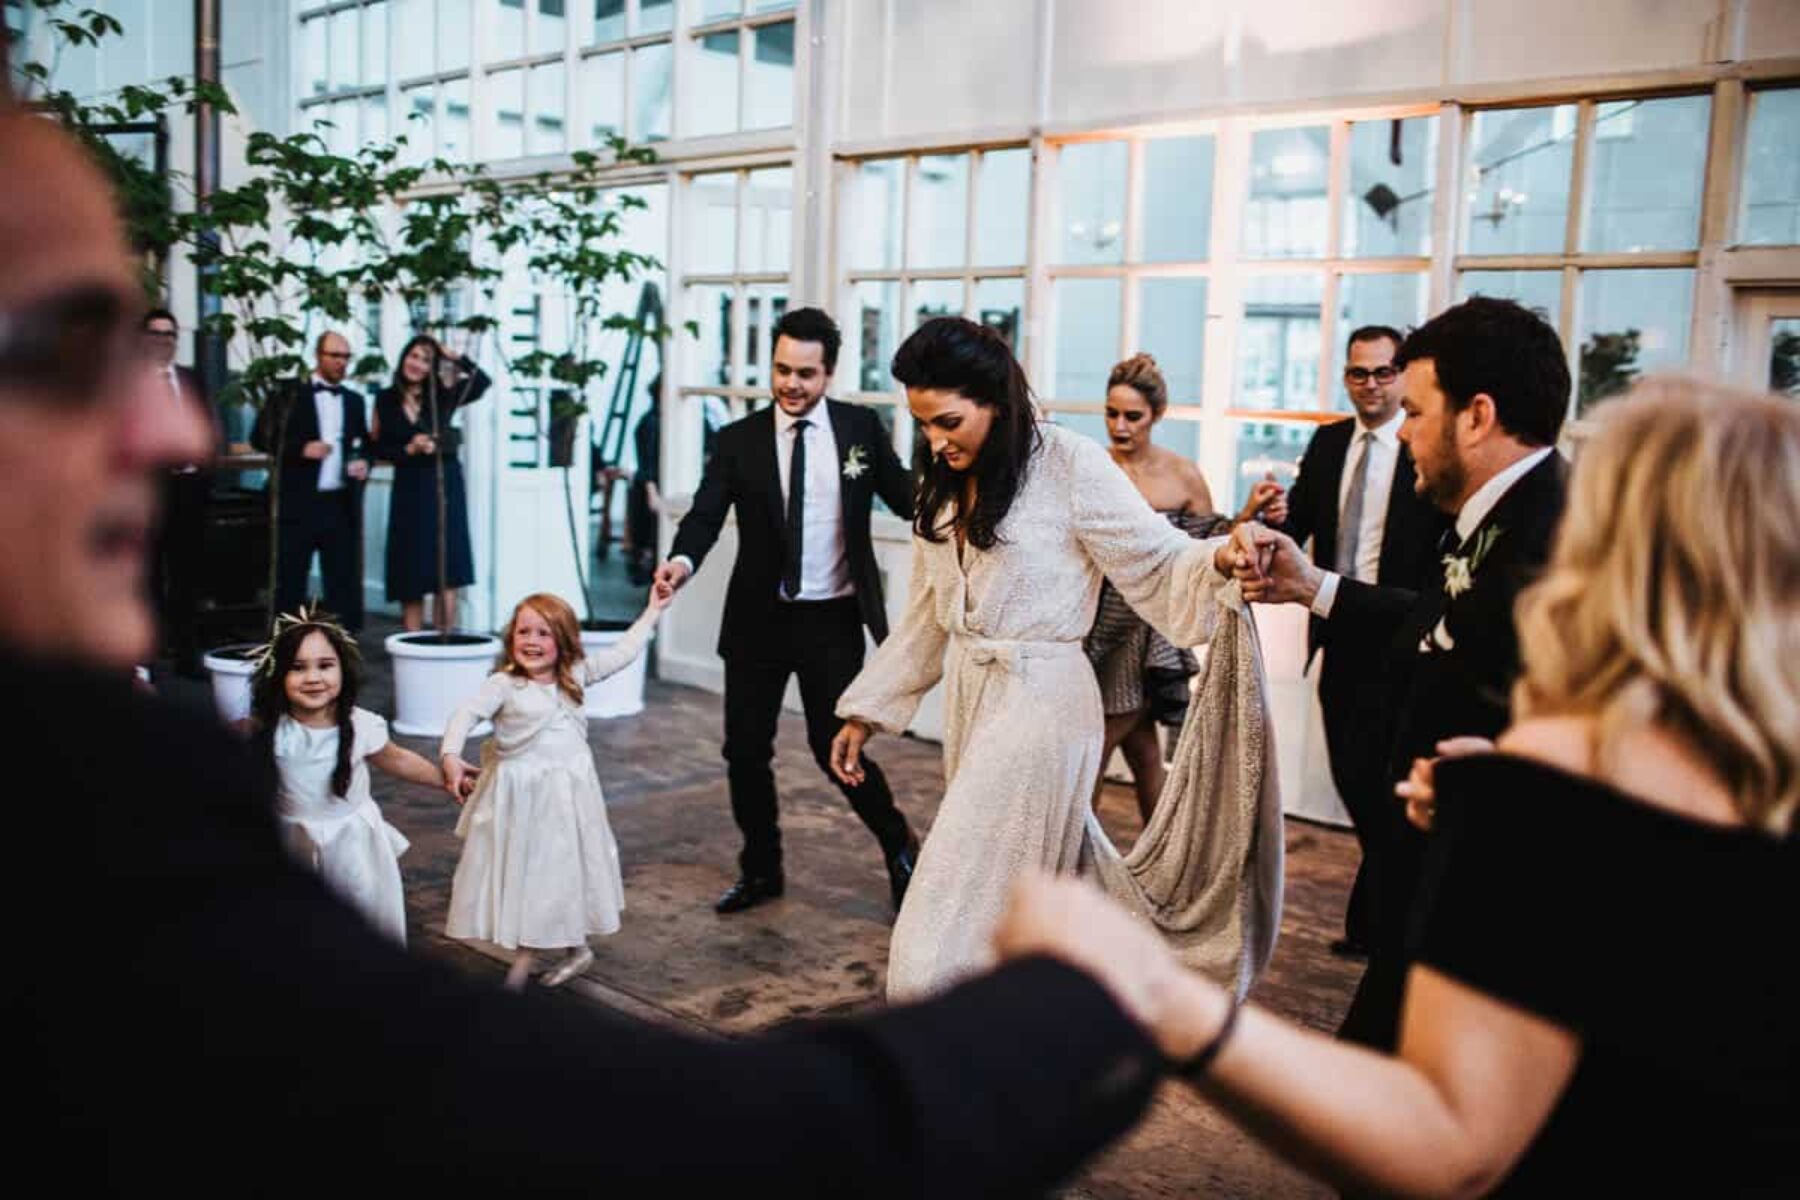 Greek wedding dancing